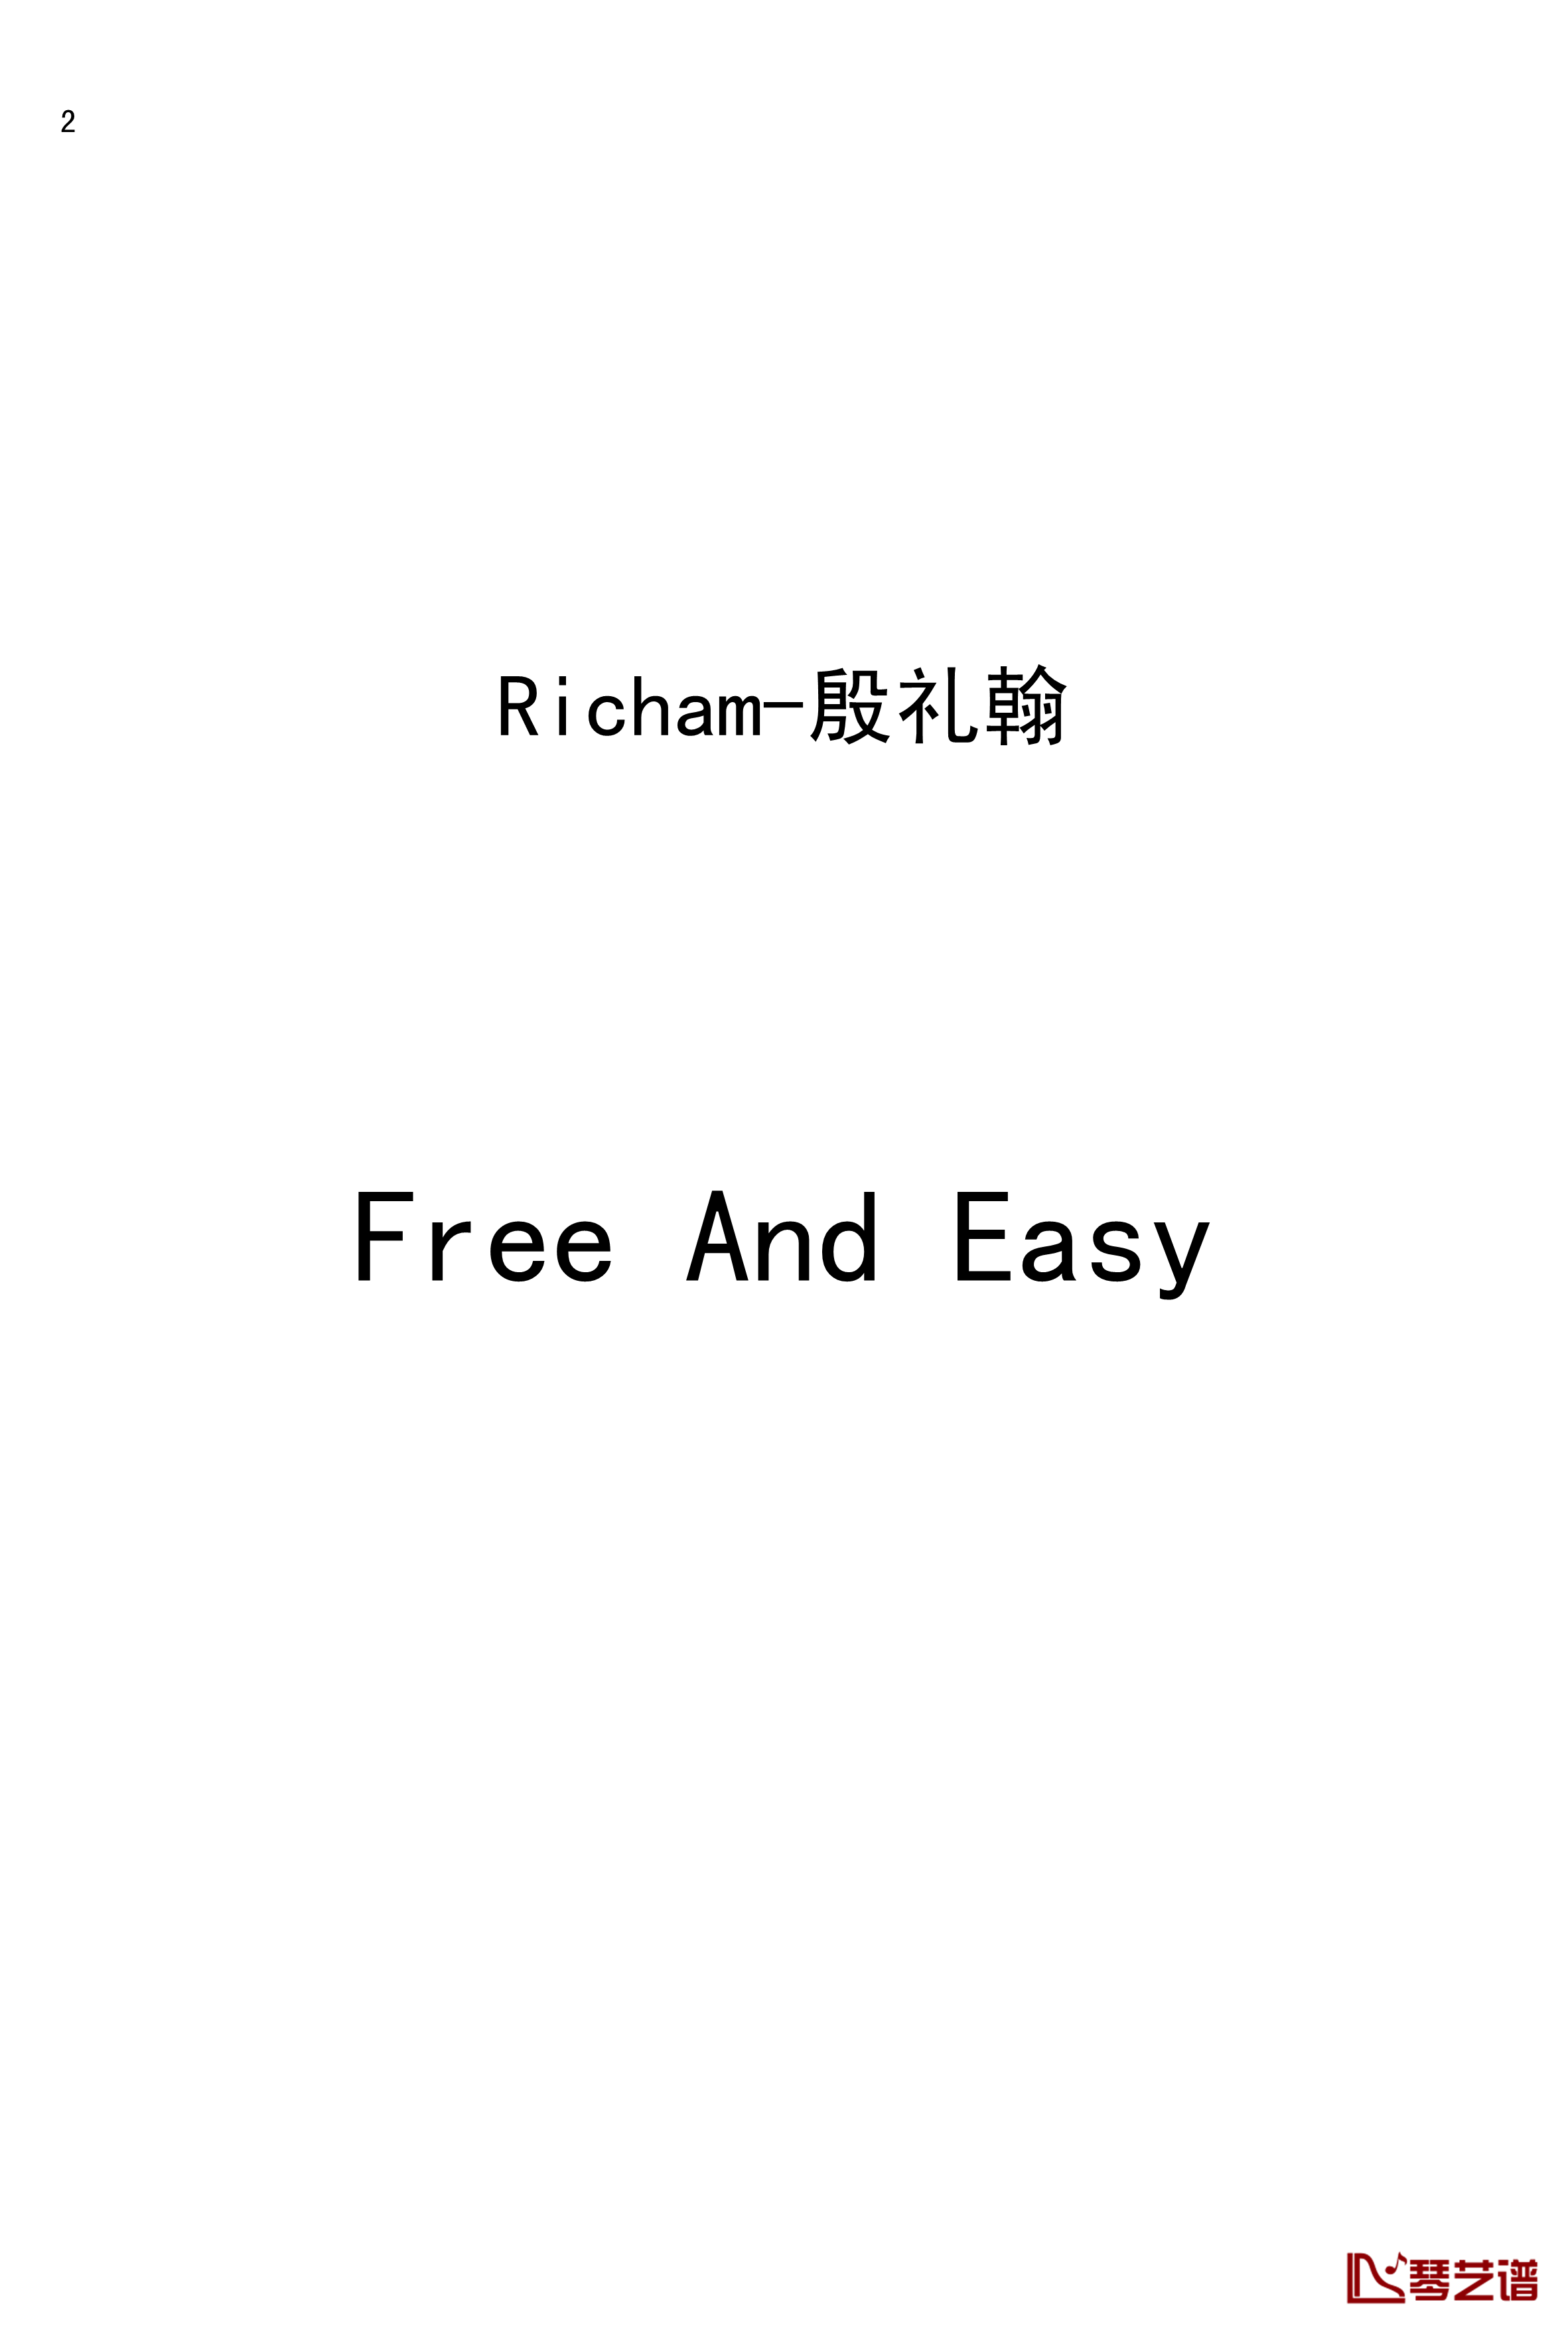 Free And Easy钢琴谱-Richam2